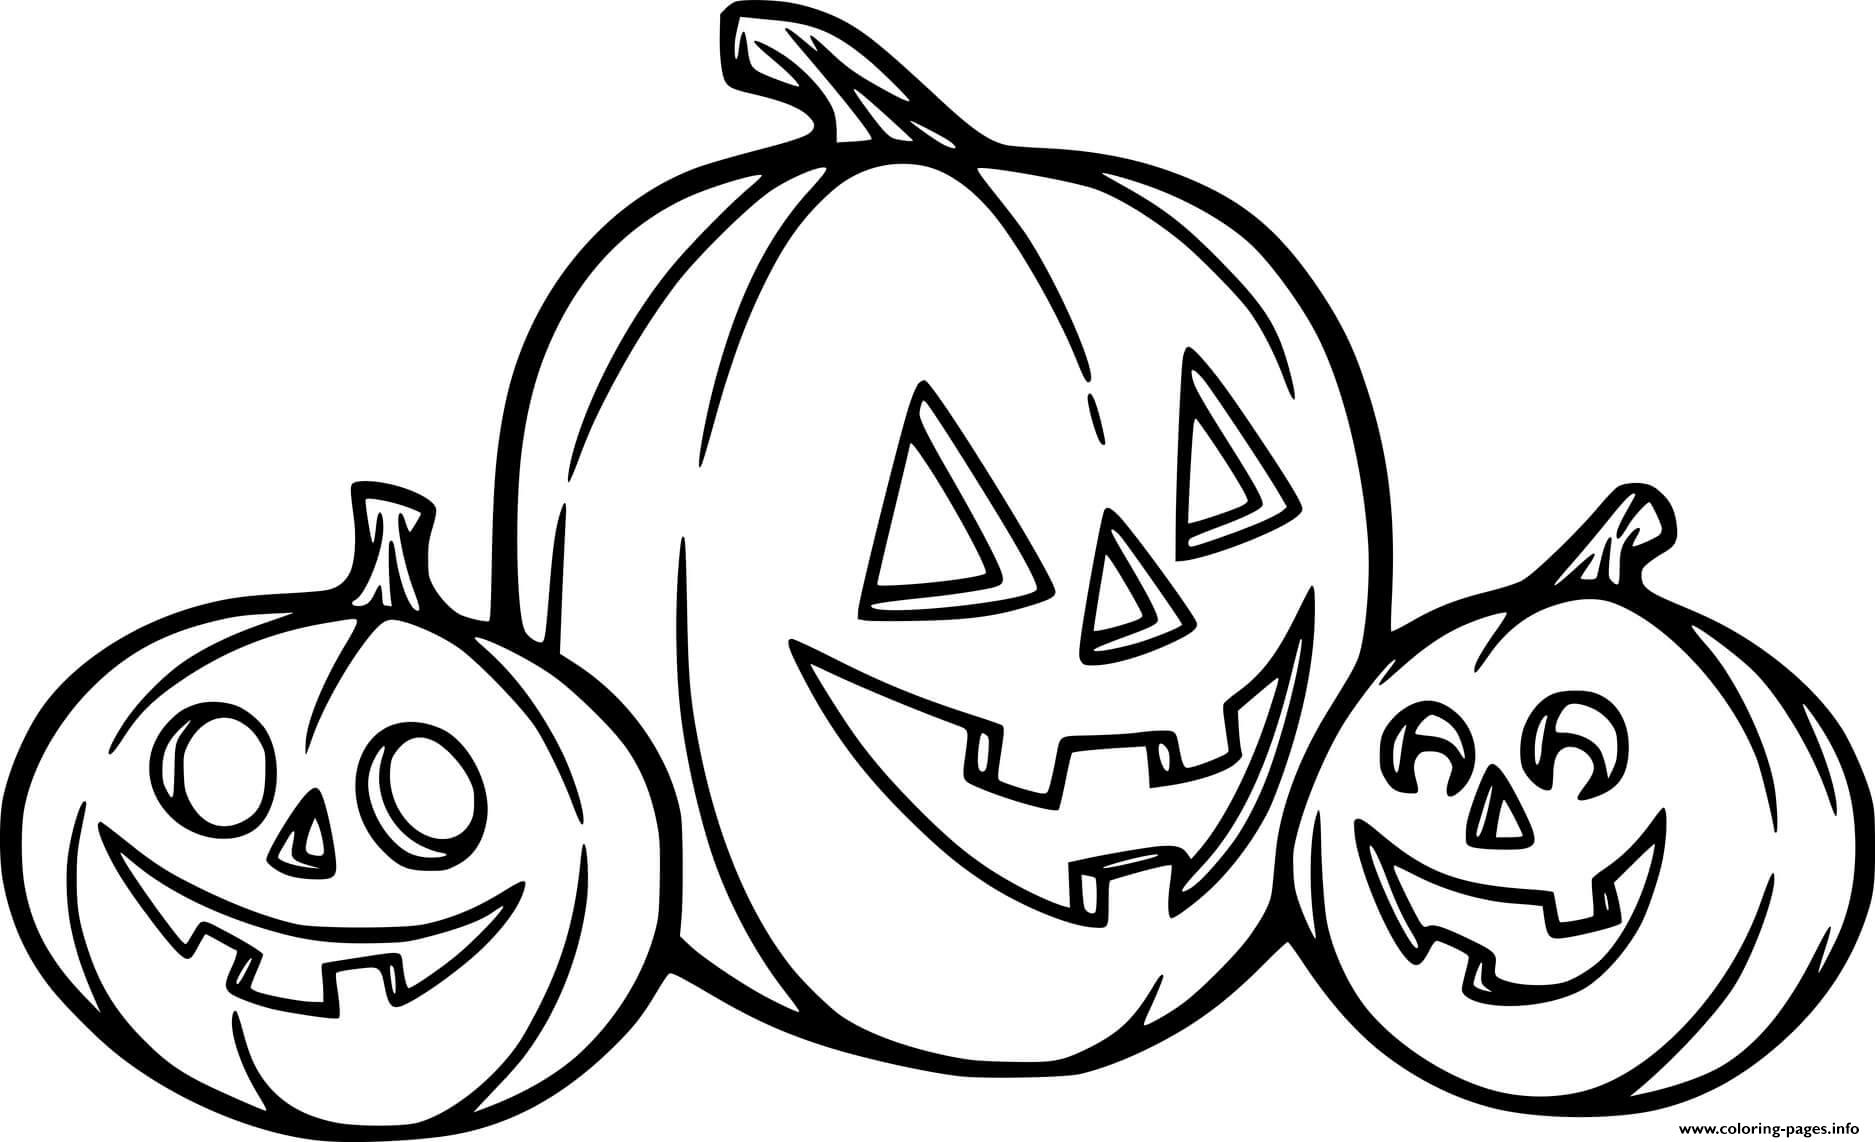 Three Happy Jack O Lanterns coloring